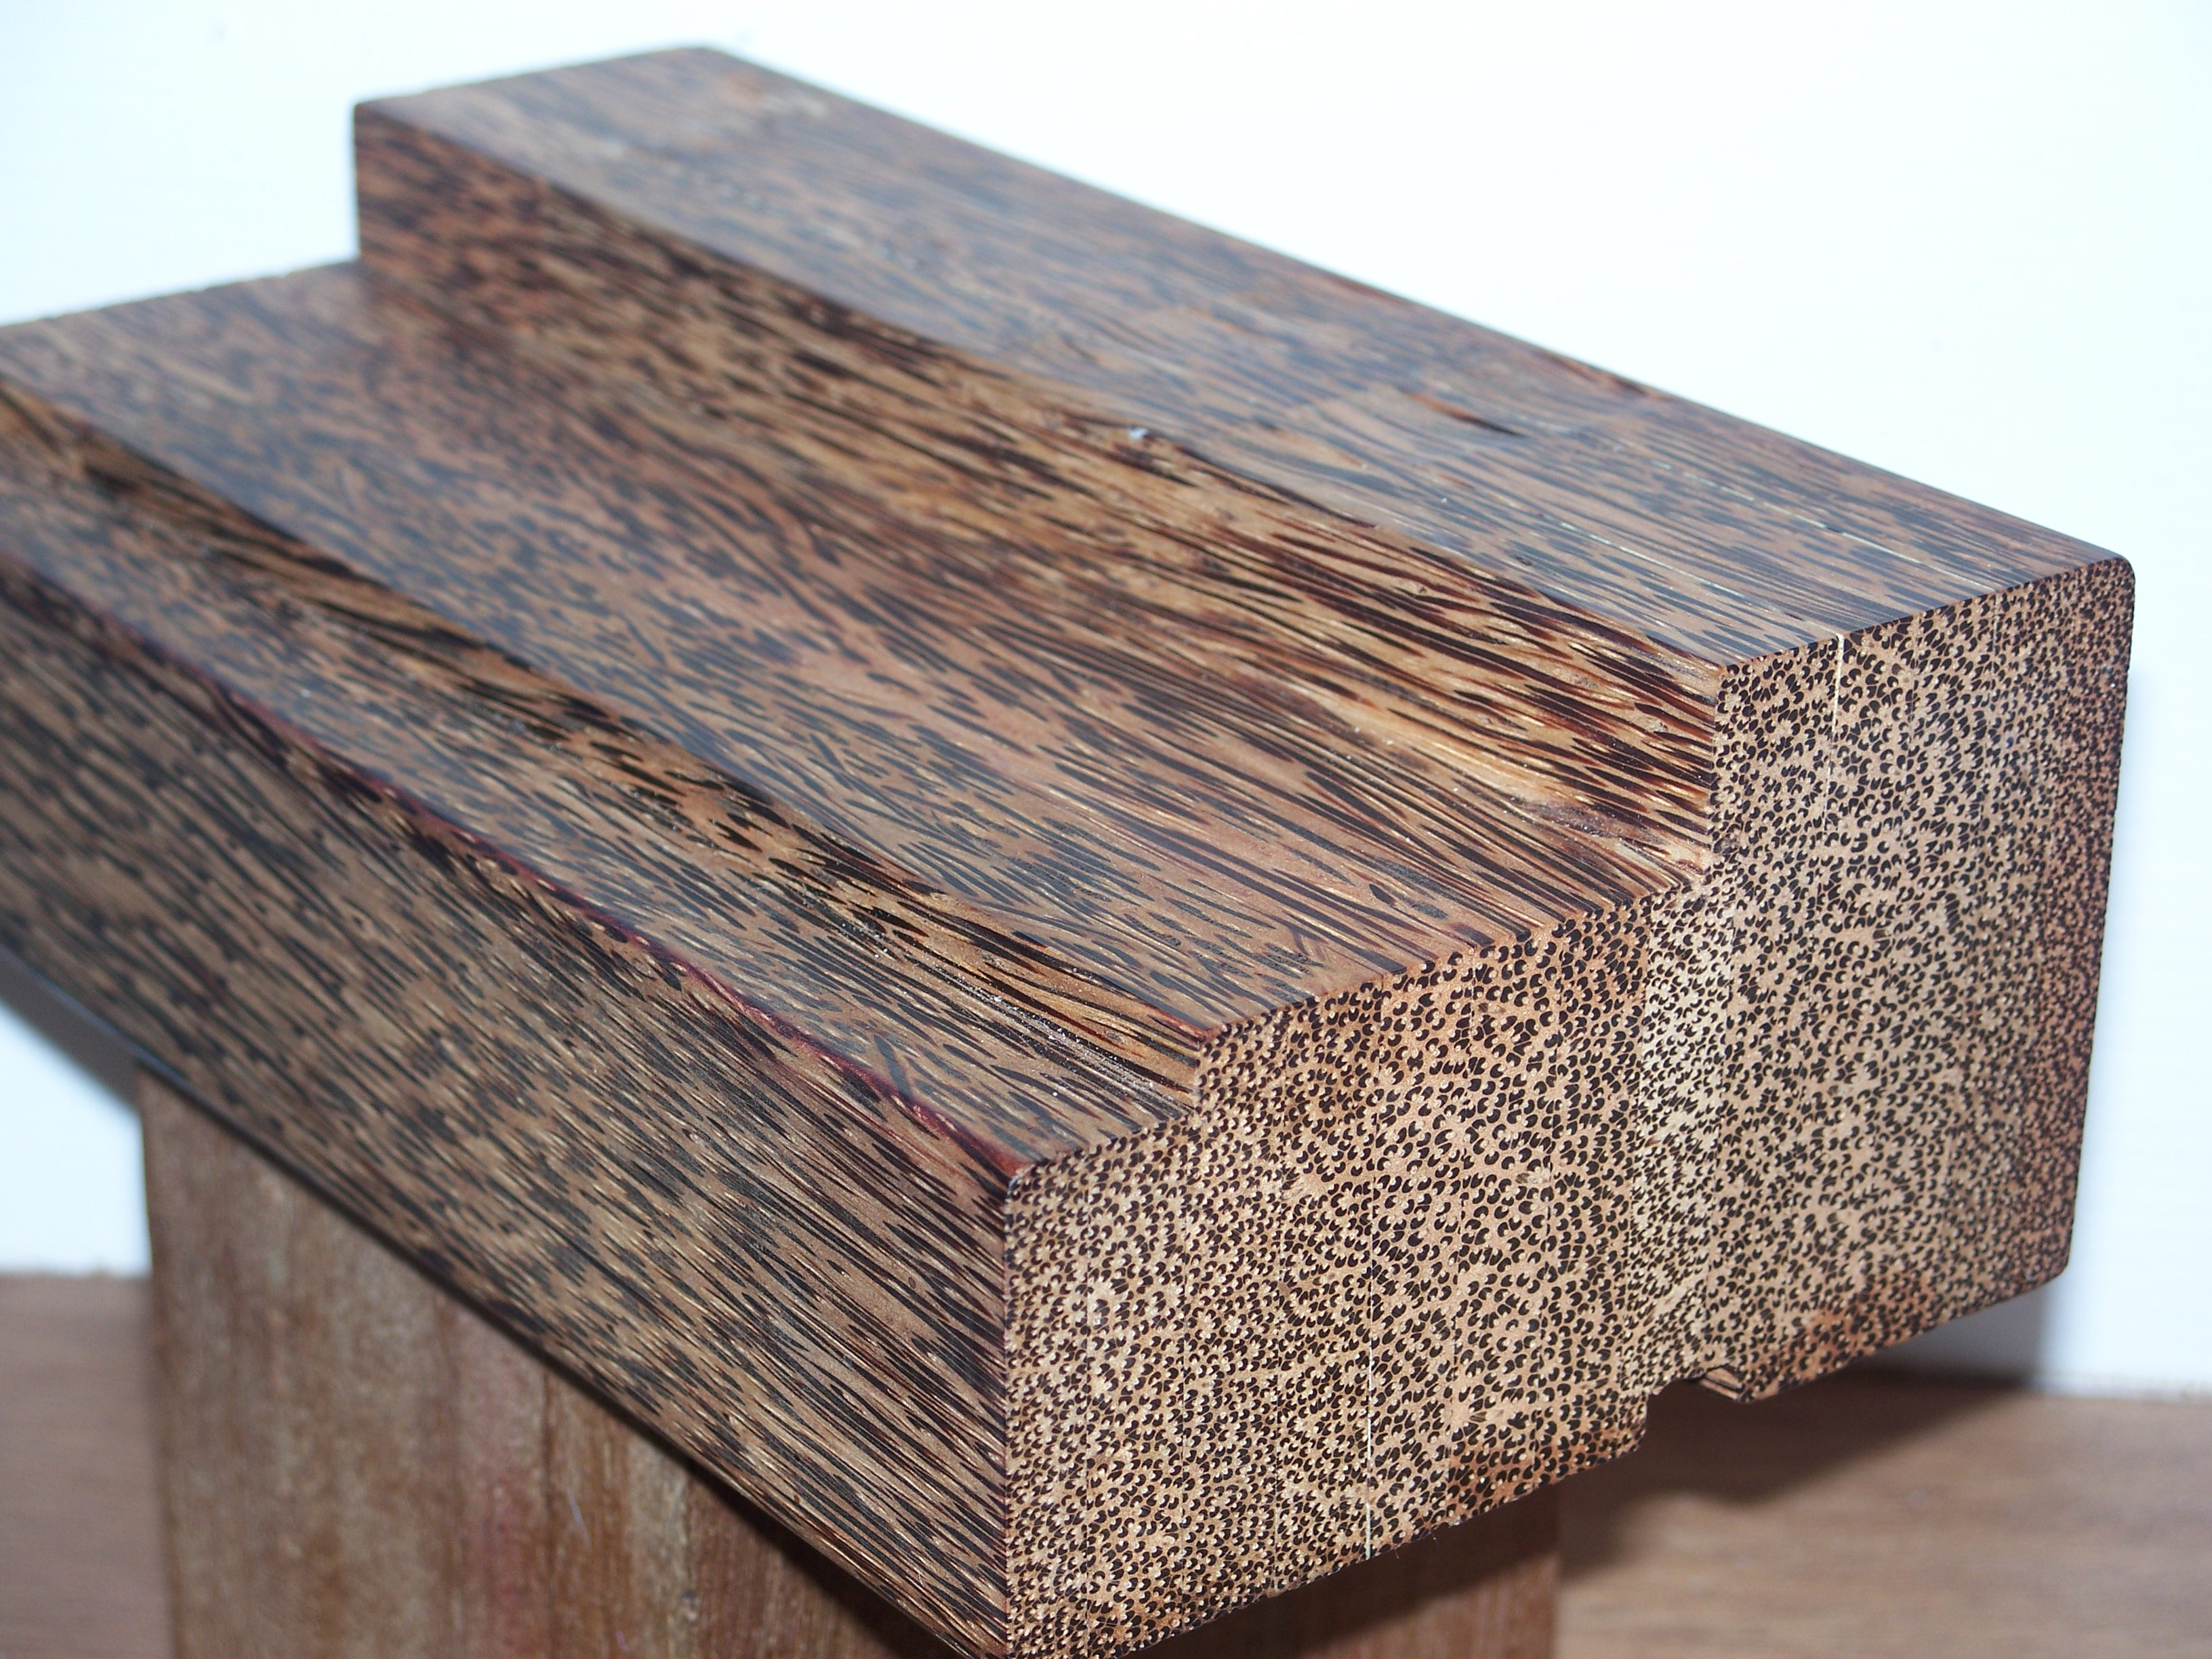 ASCO-Timber KK: Ecologisch Duurzaam hout op basis van